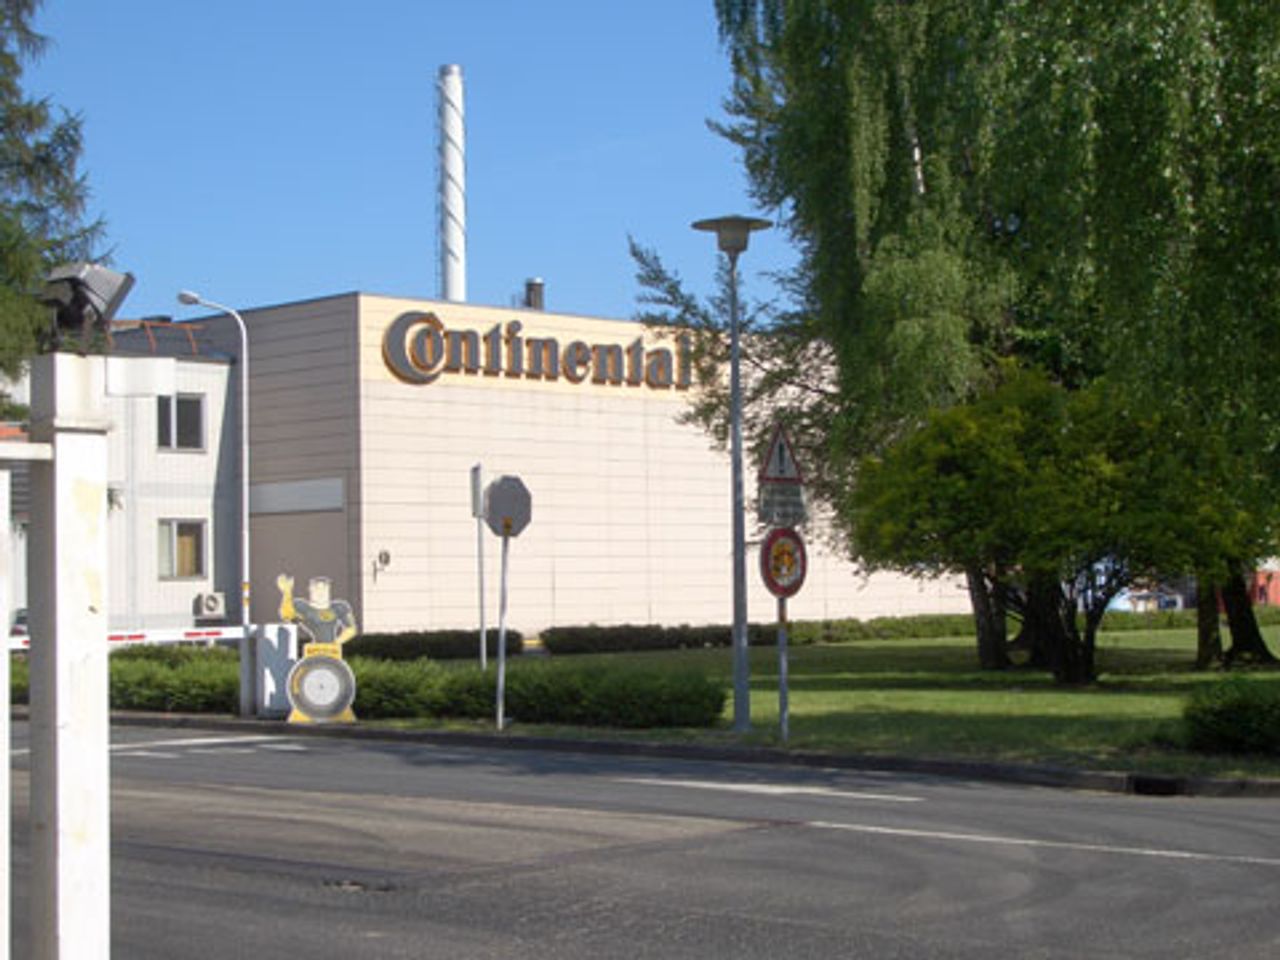 Continental plant